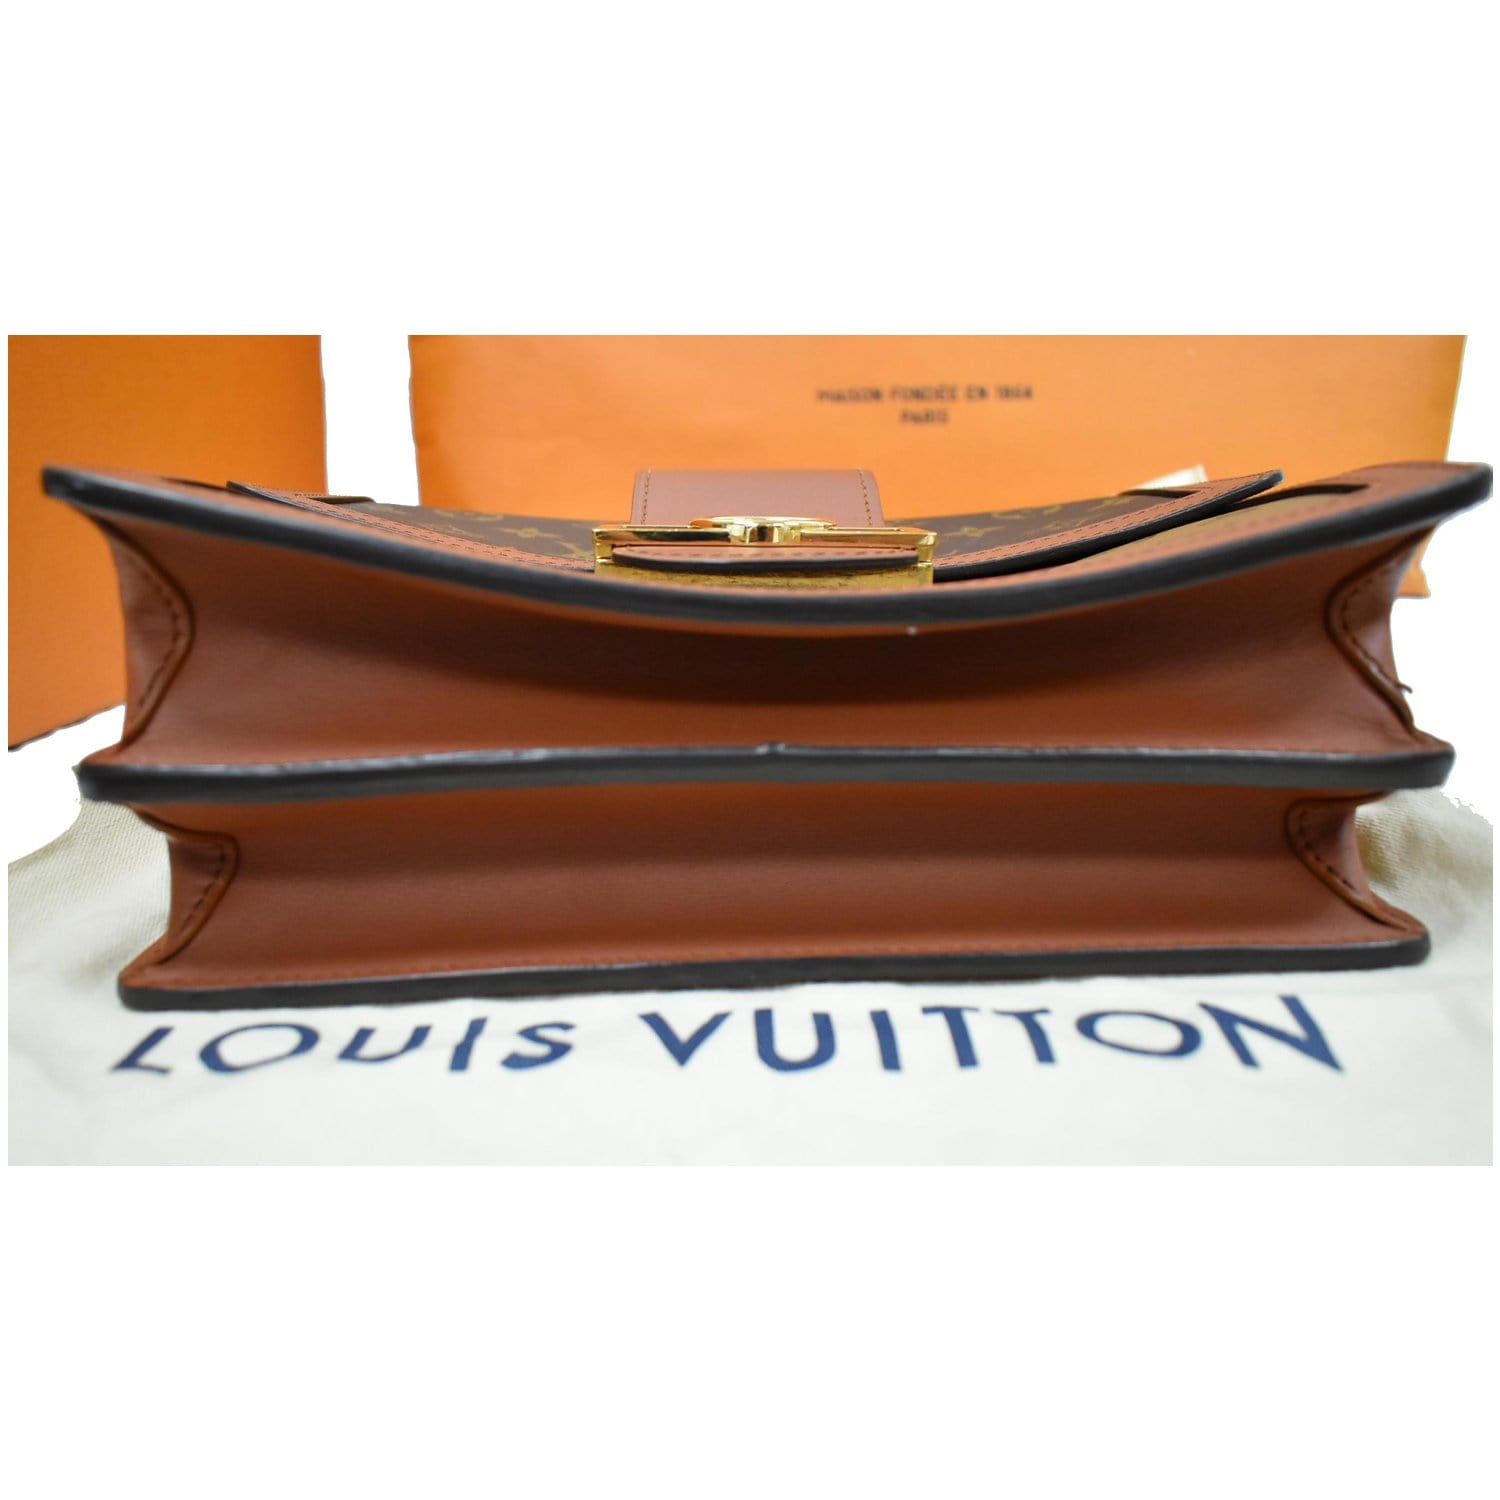 Louis Vuitton Dauphine MM Monogram Canvas